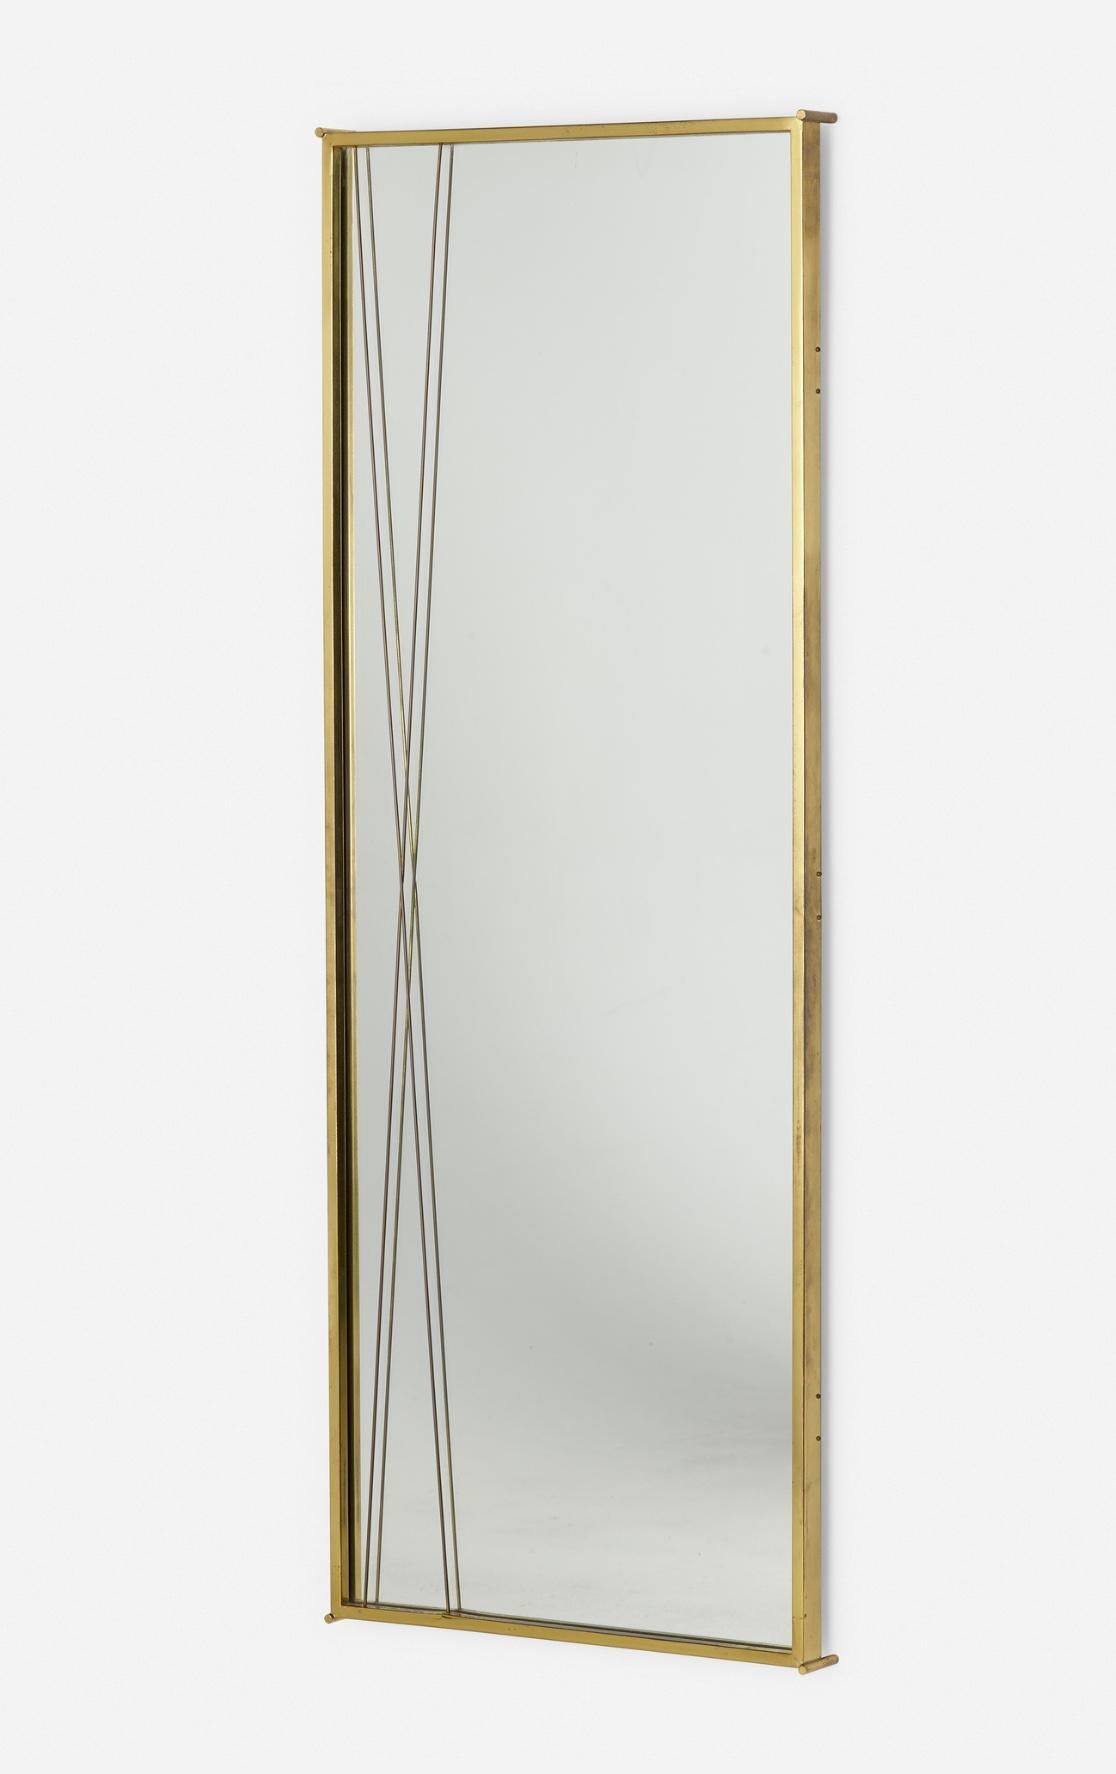 Paul McCobb X mirror manufactured by Calvin.
An elegant Minimalist Design
Original brass surface and mirror.